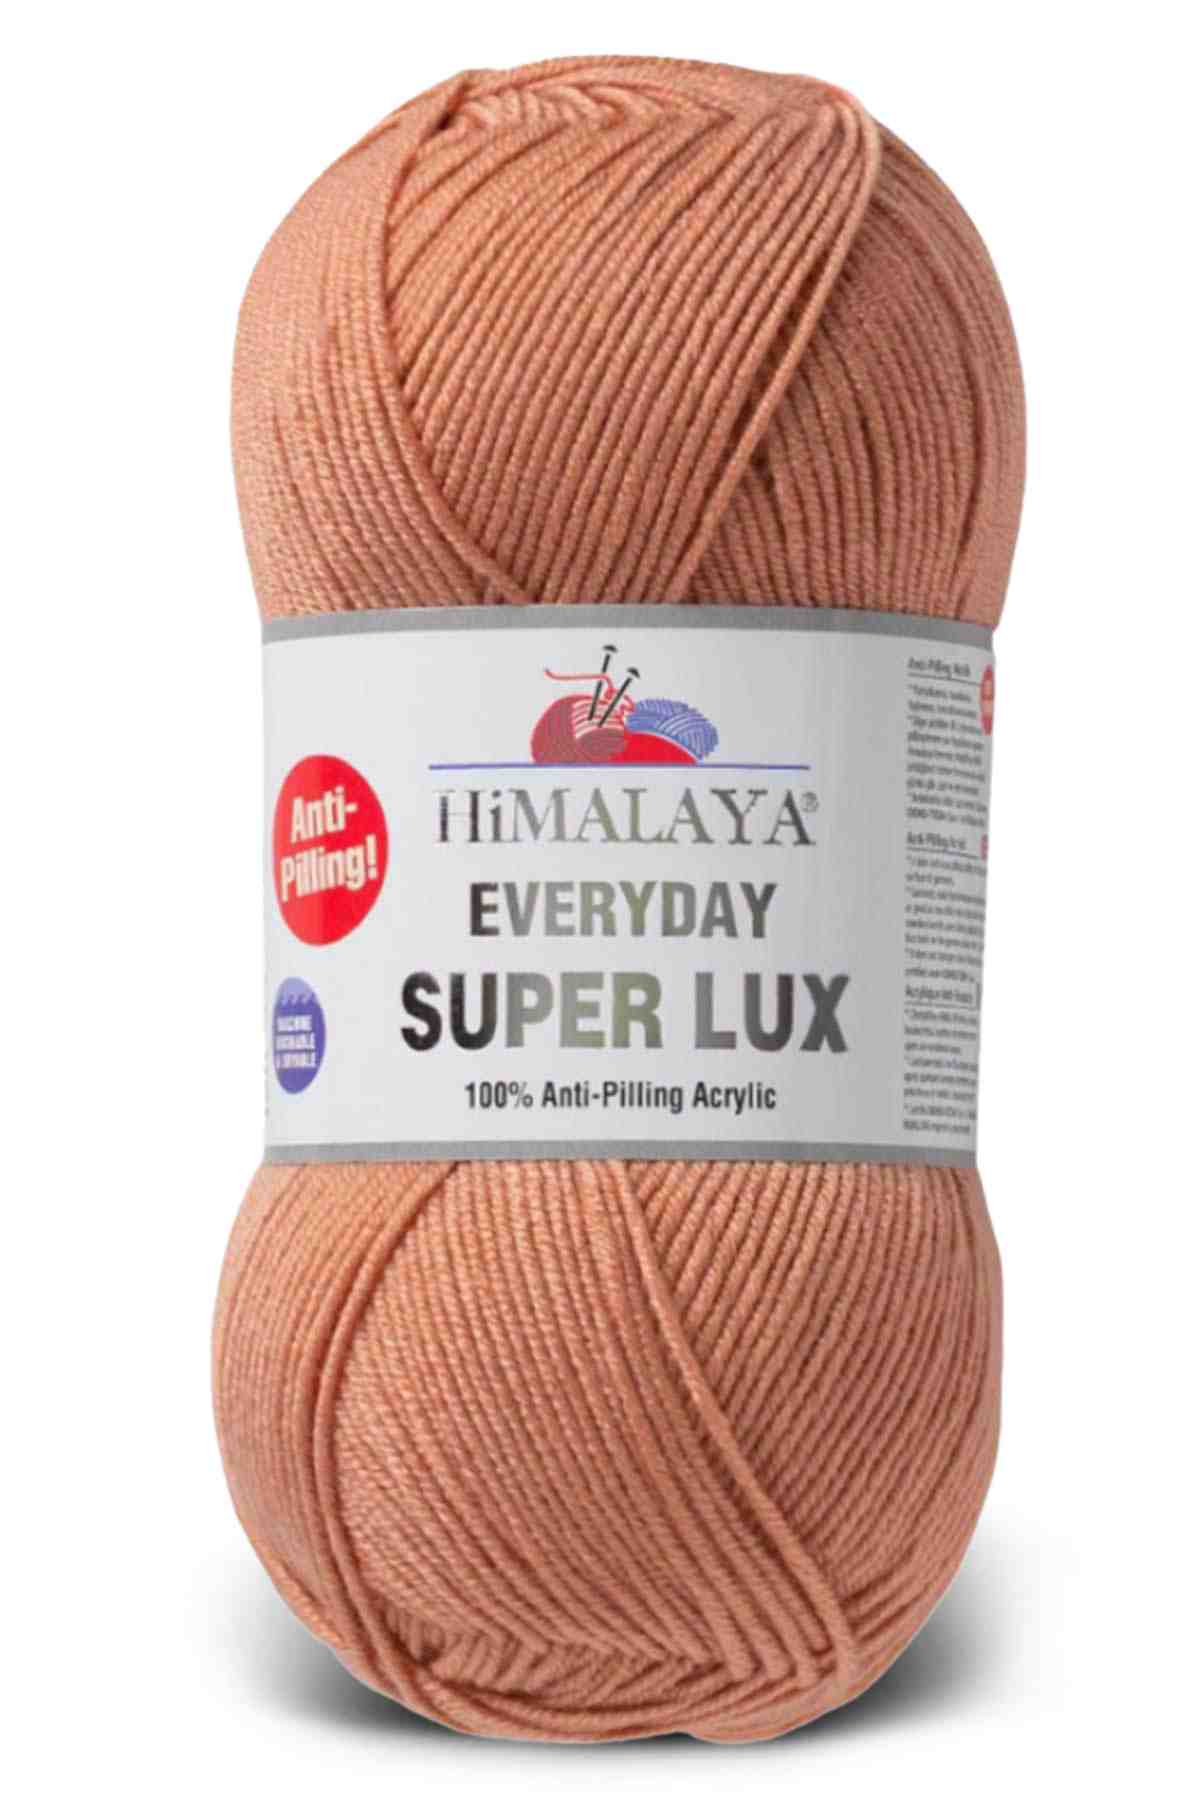 Himalaya Everday Süper Lüx Anti-Pilling Acrylic Yarn